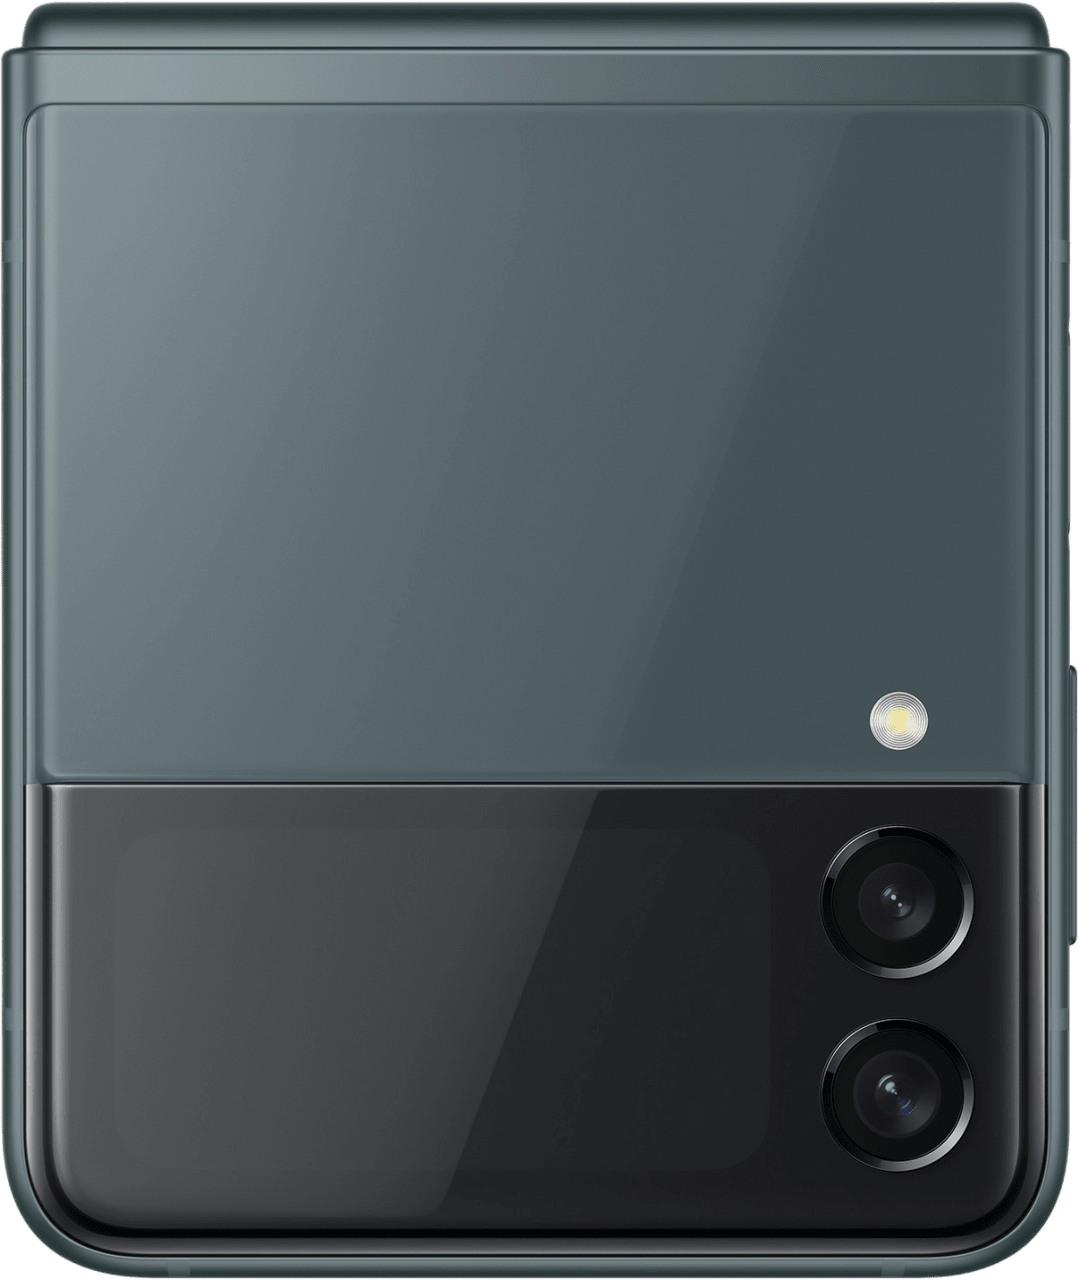 Green Samsung Galaxy Z Flip 3 Smartphone - 128GB - Single Sim.2